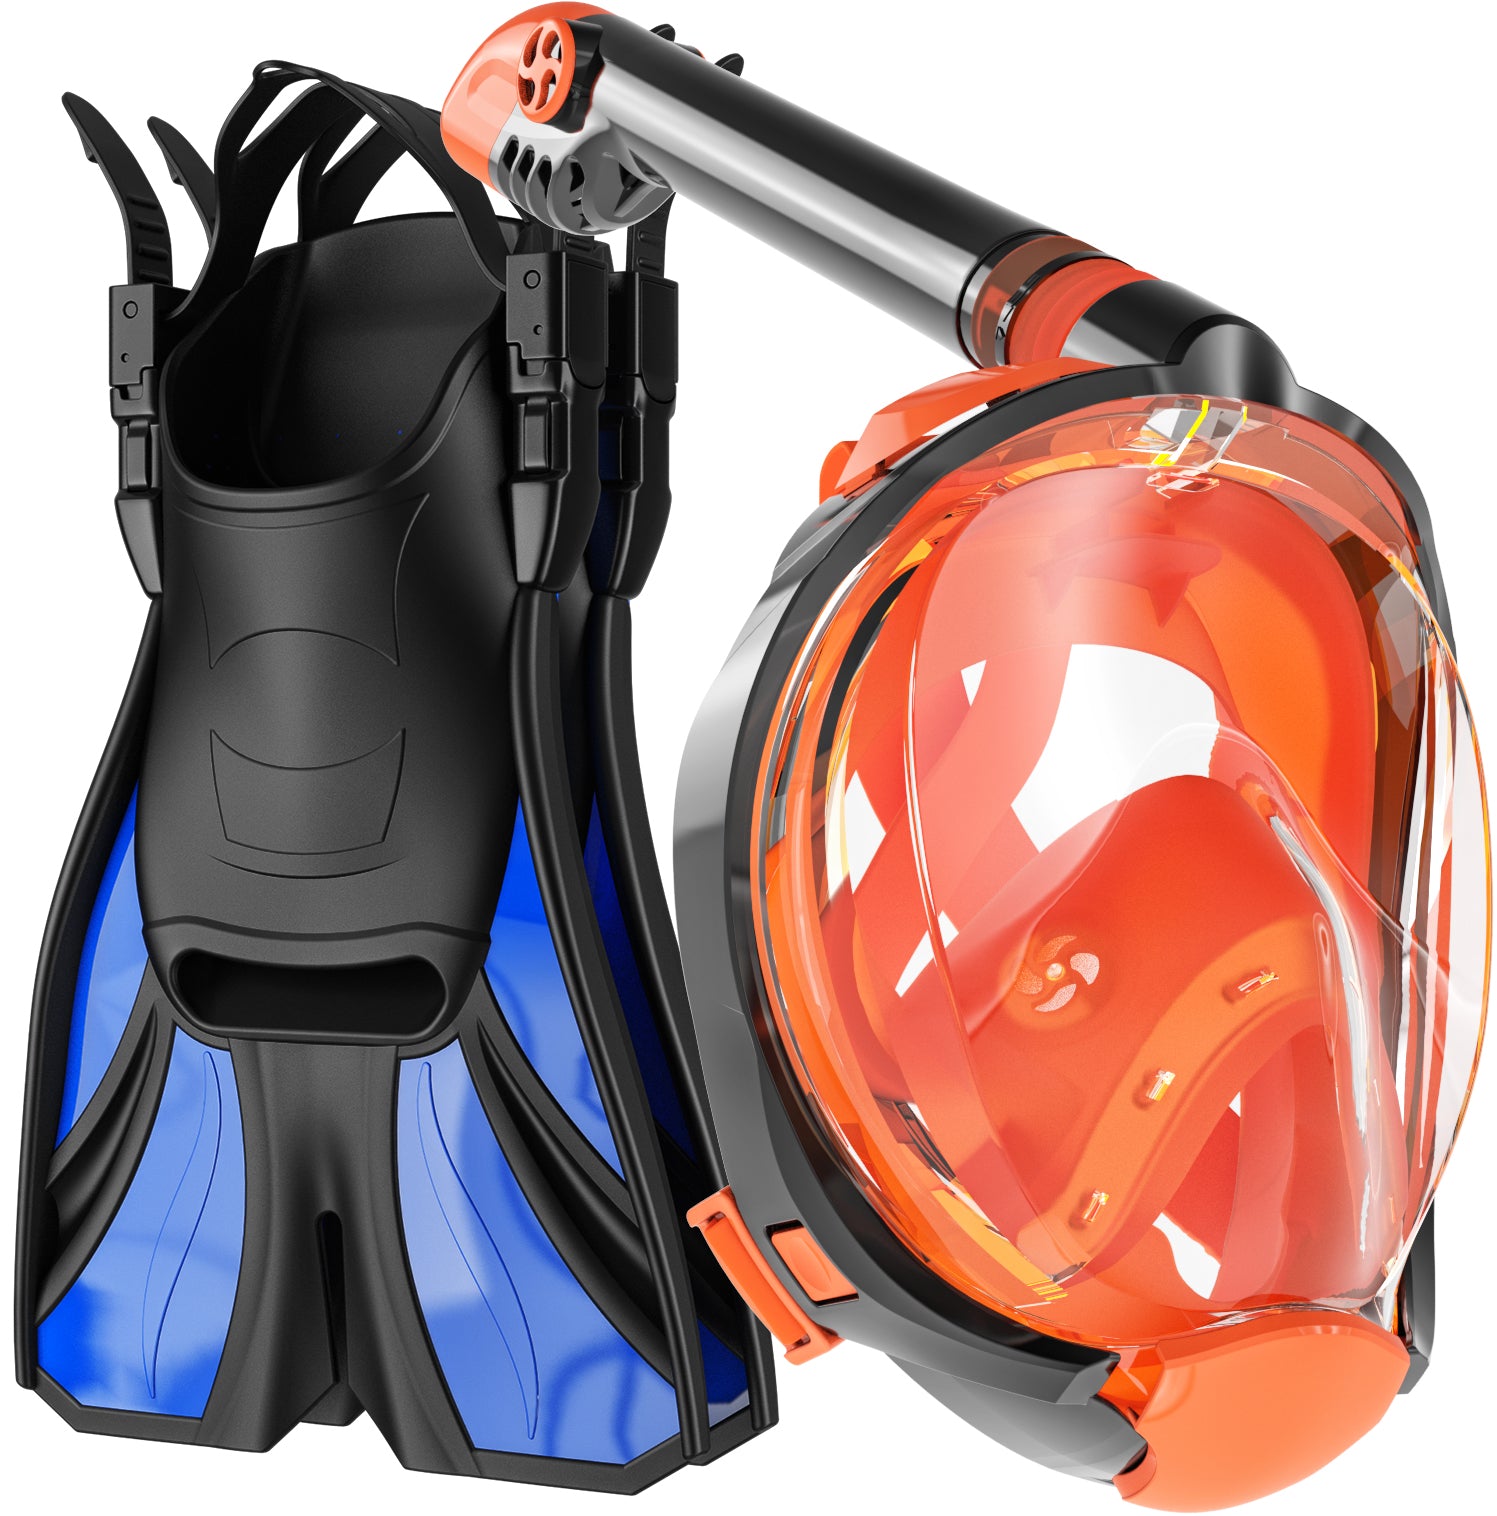 Snorkel Set Adult (Orange) - Full Face Mask and Adjustable Swim Fins, 180° Panoramic View, Anti Fog and Anti Leak